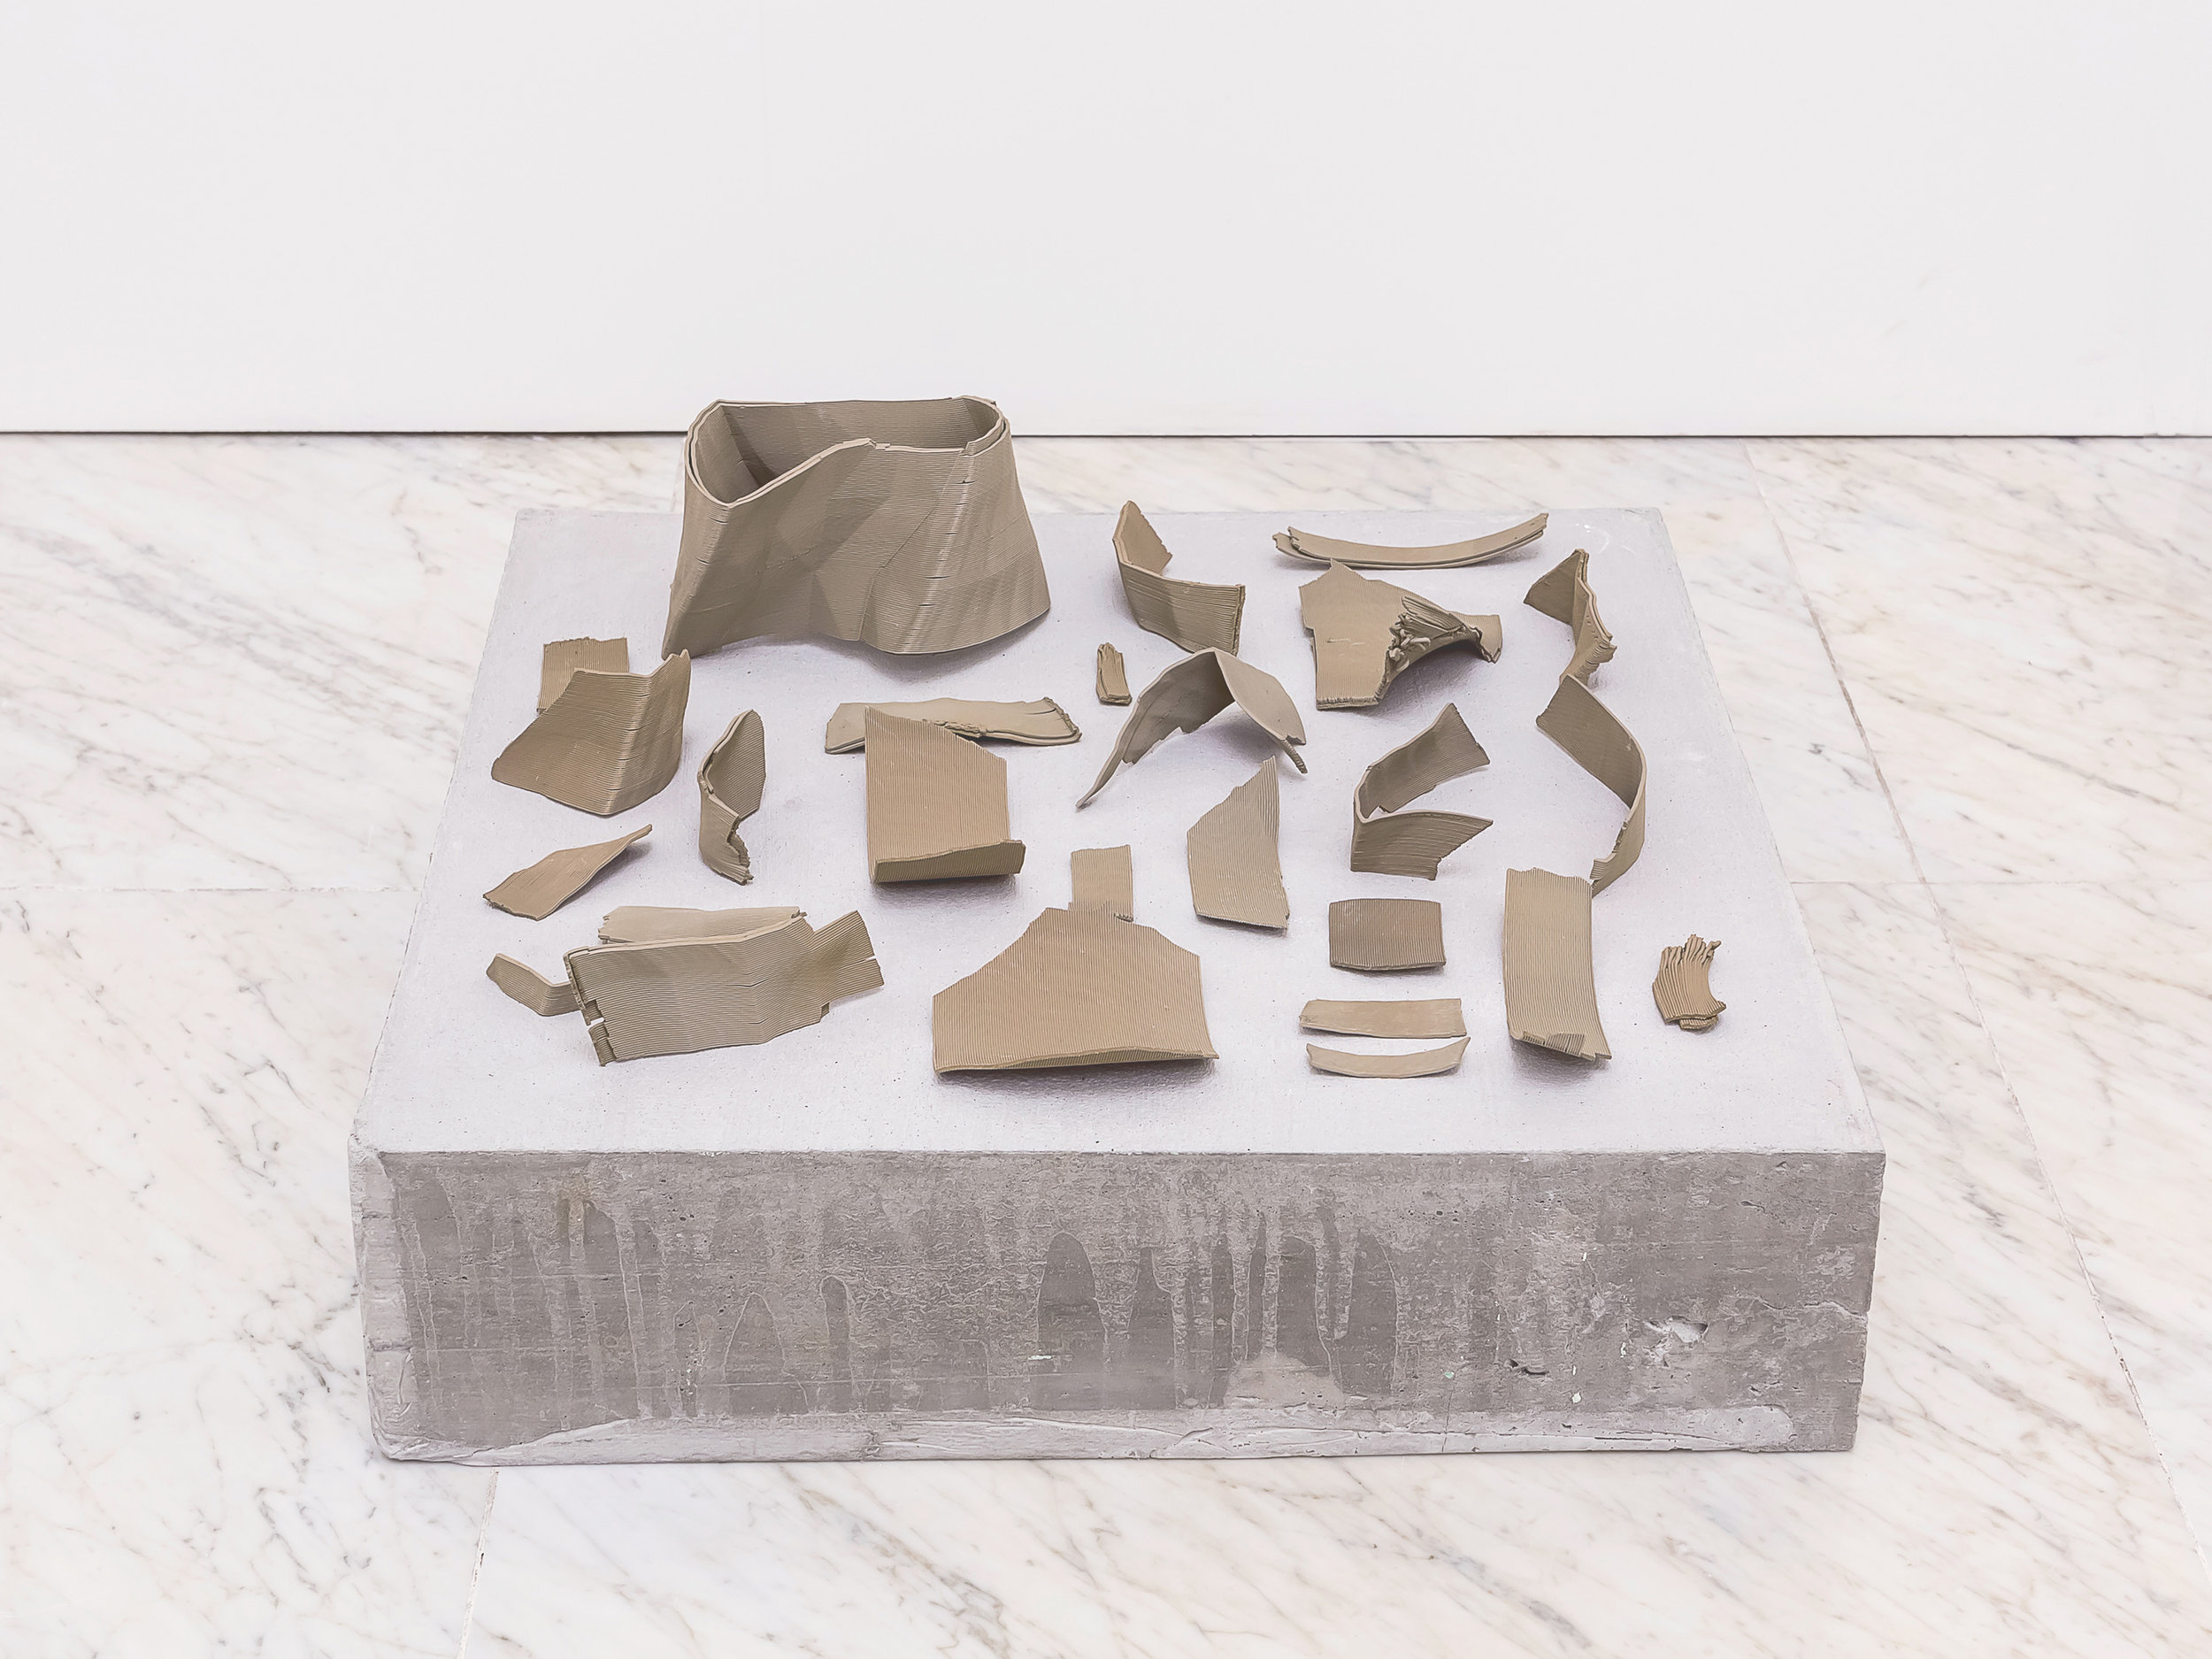   Excavata , 3D printed earthenware, concrete and calcium carbonate plinth, 60x60x40cm, Carrara 2016 